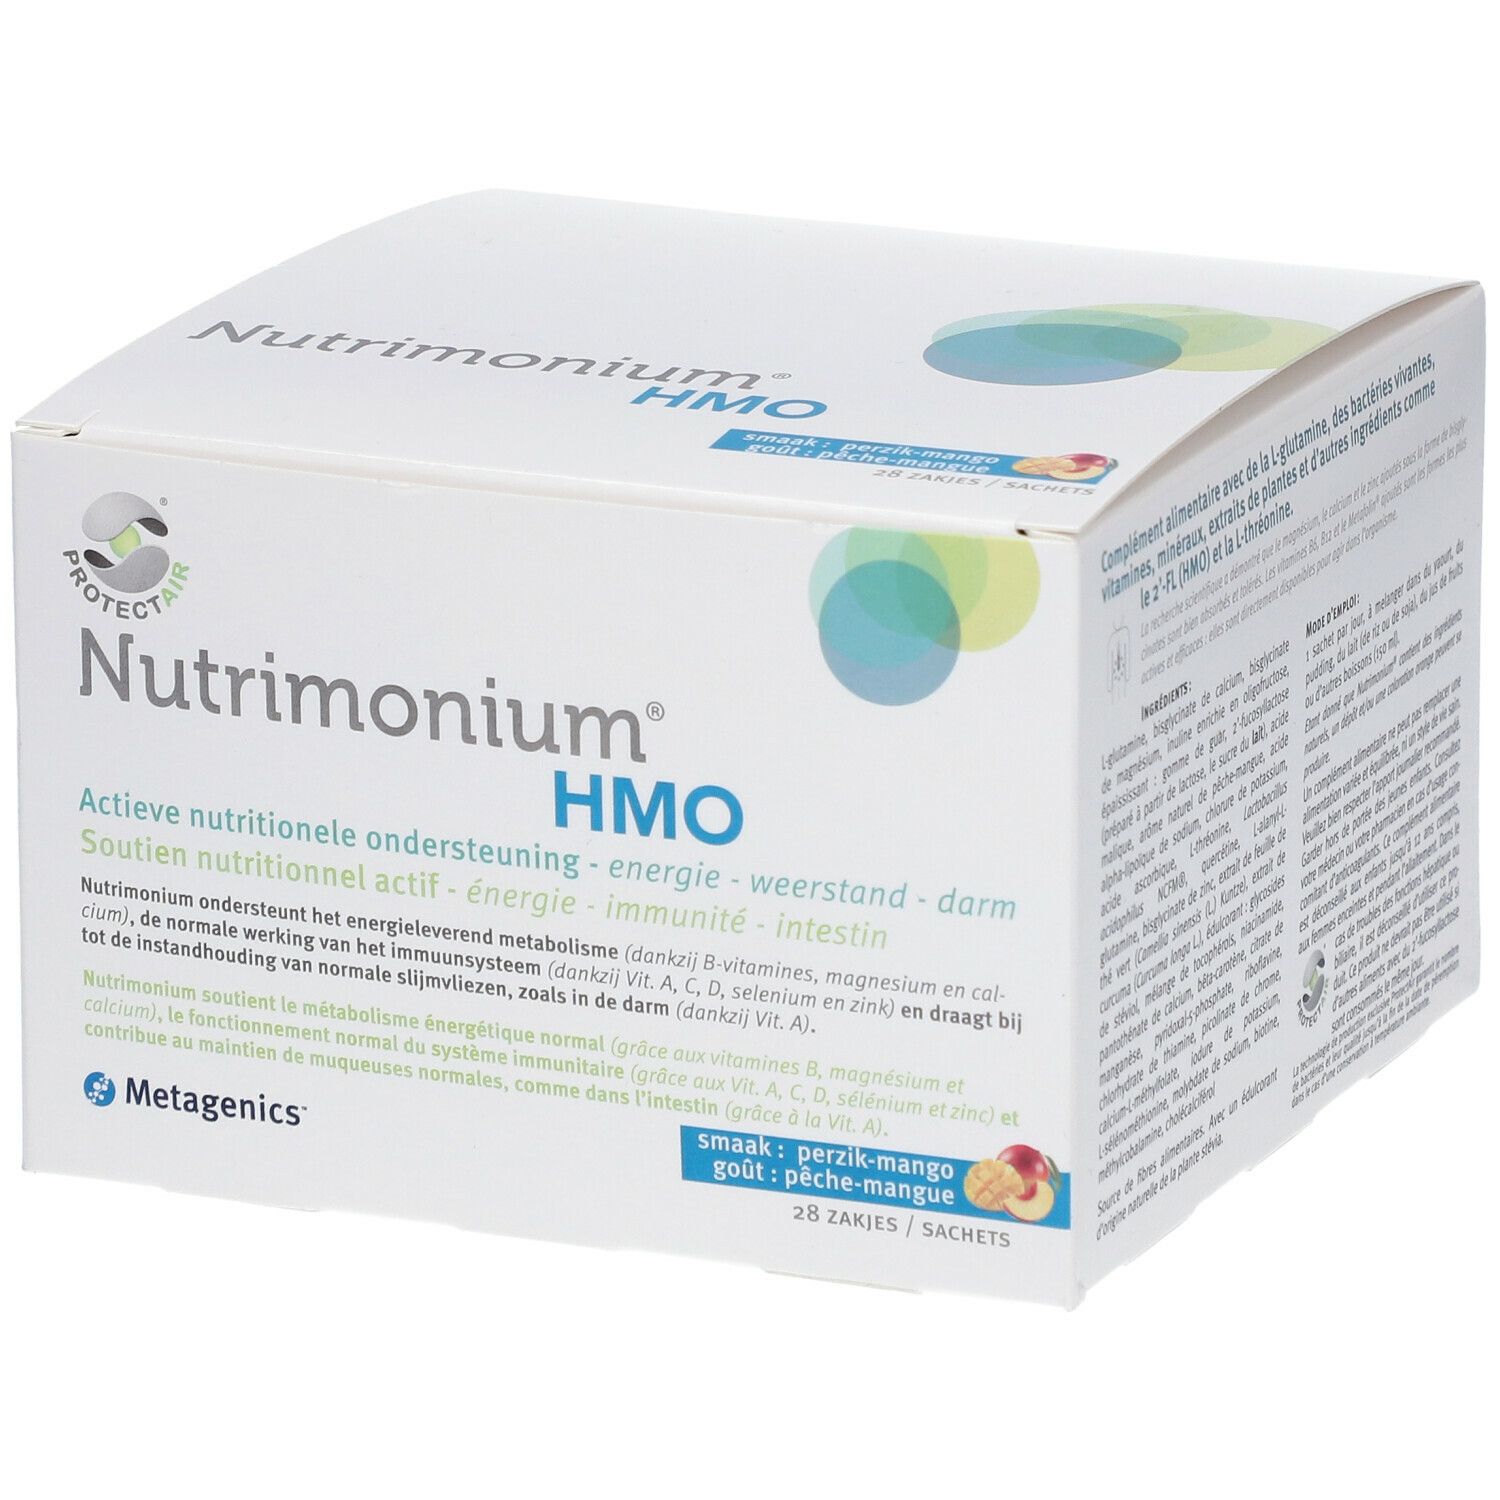 Metagenics® Nutrimonium® HMO Pêche - Mangue